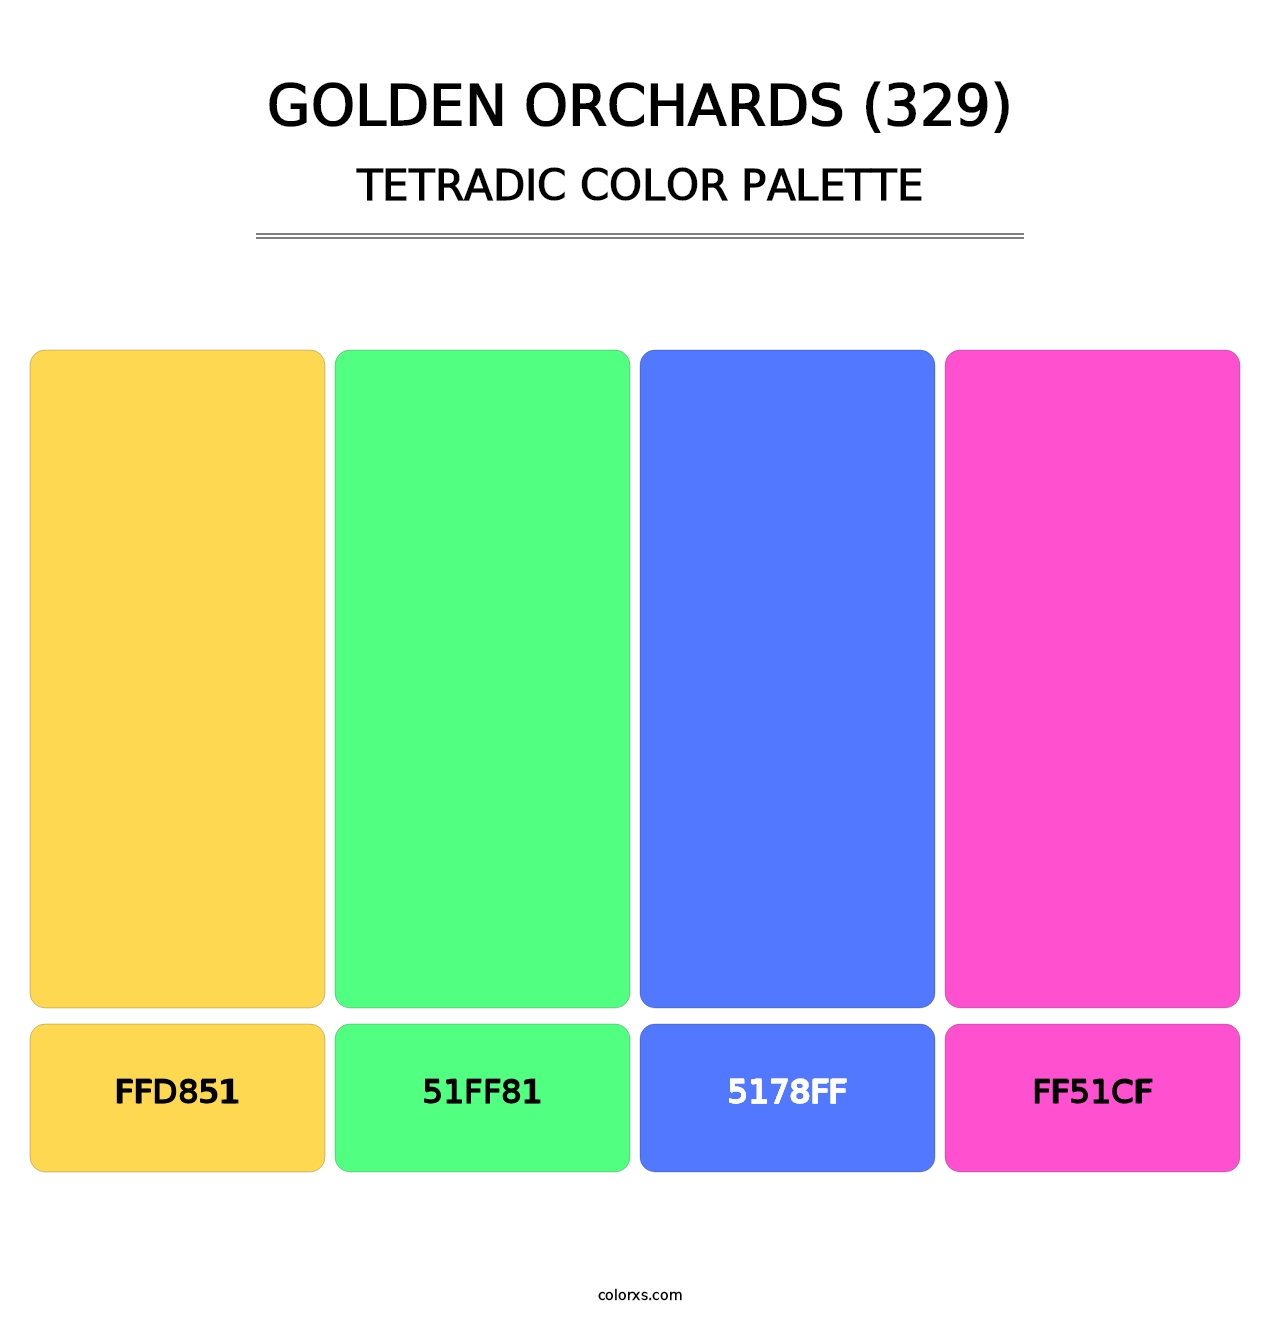 Golden Orchards (329) - Tetradic Color Palette